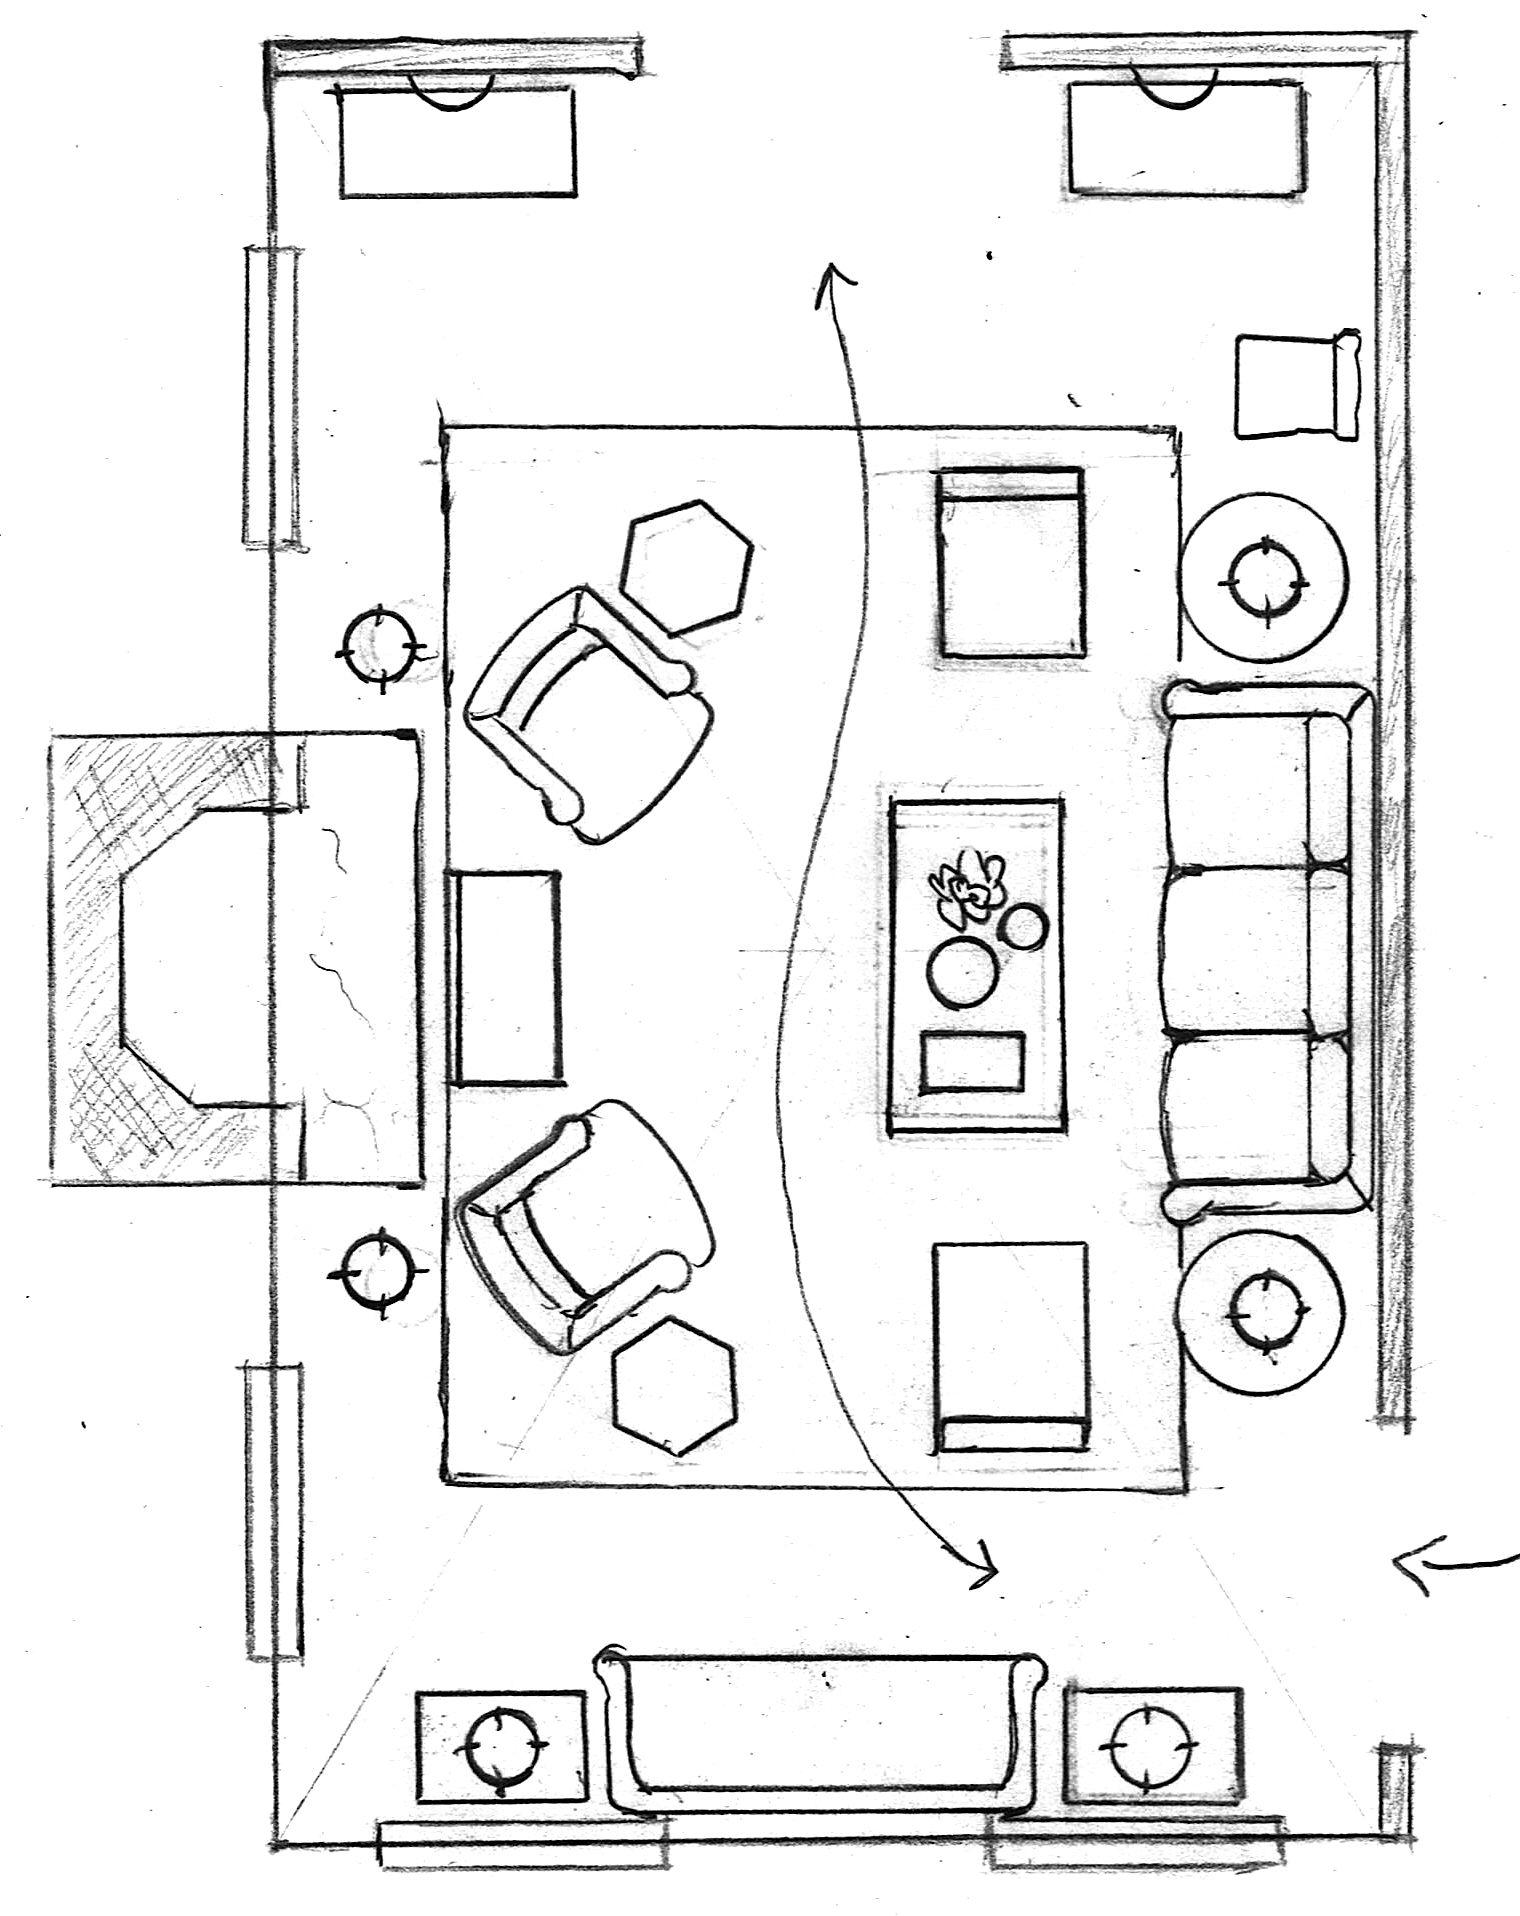 floor-plan-furnished - living room layout